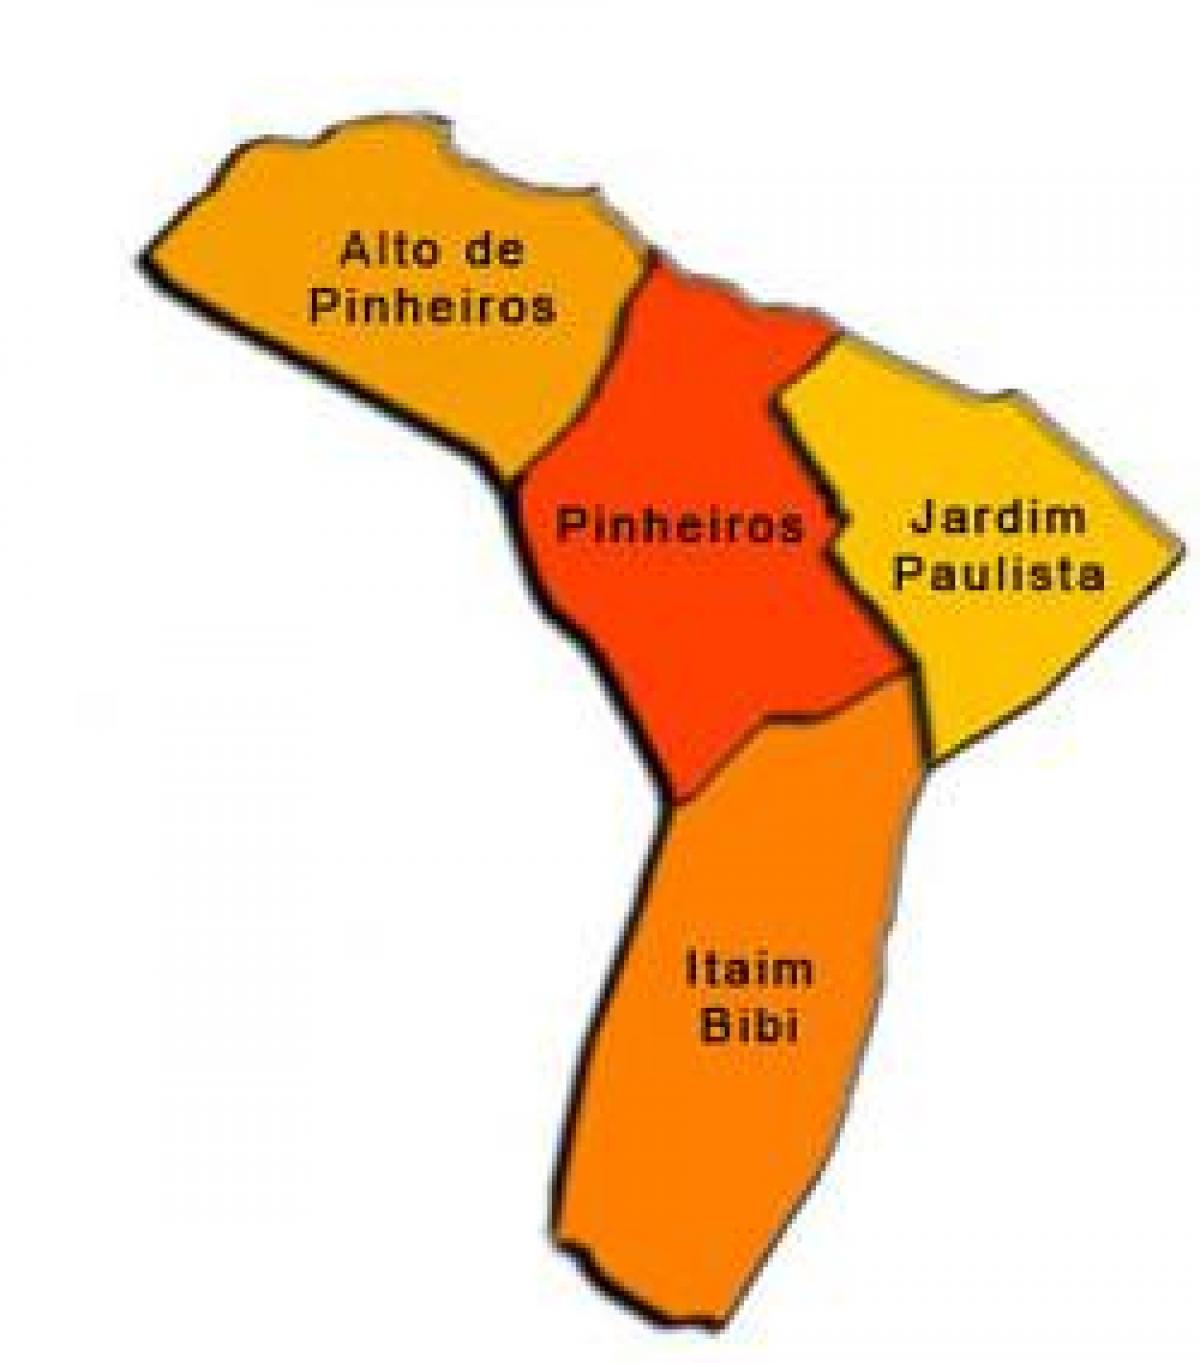 Mapa Pinheiros azpi-prefekturan